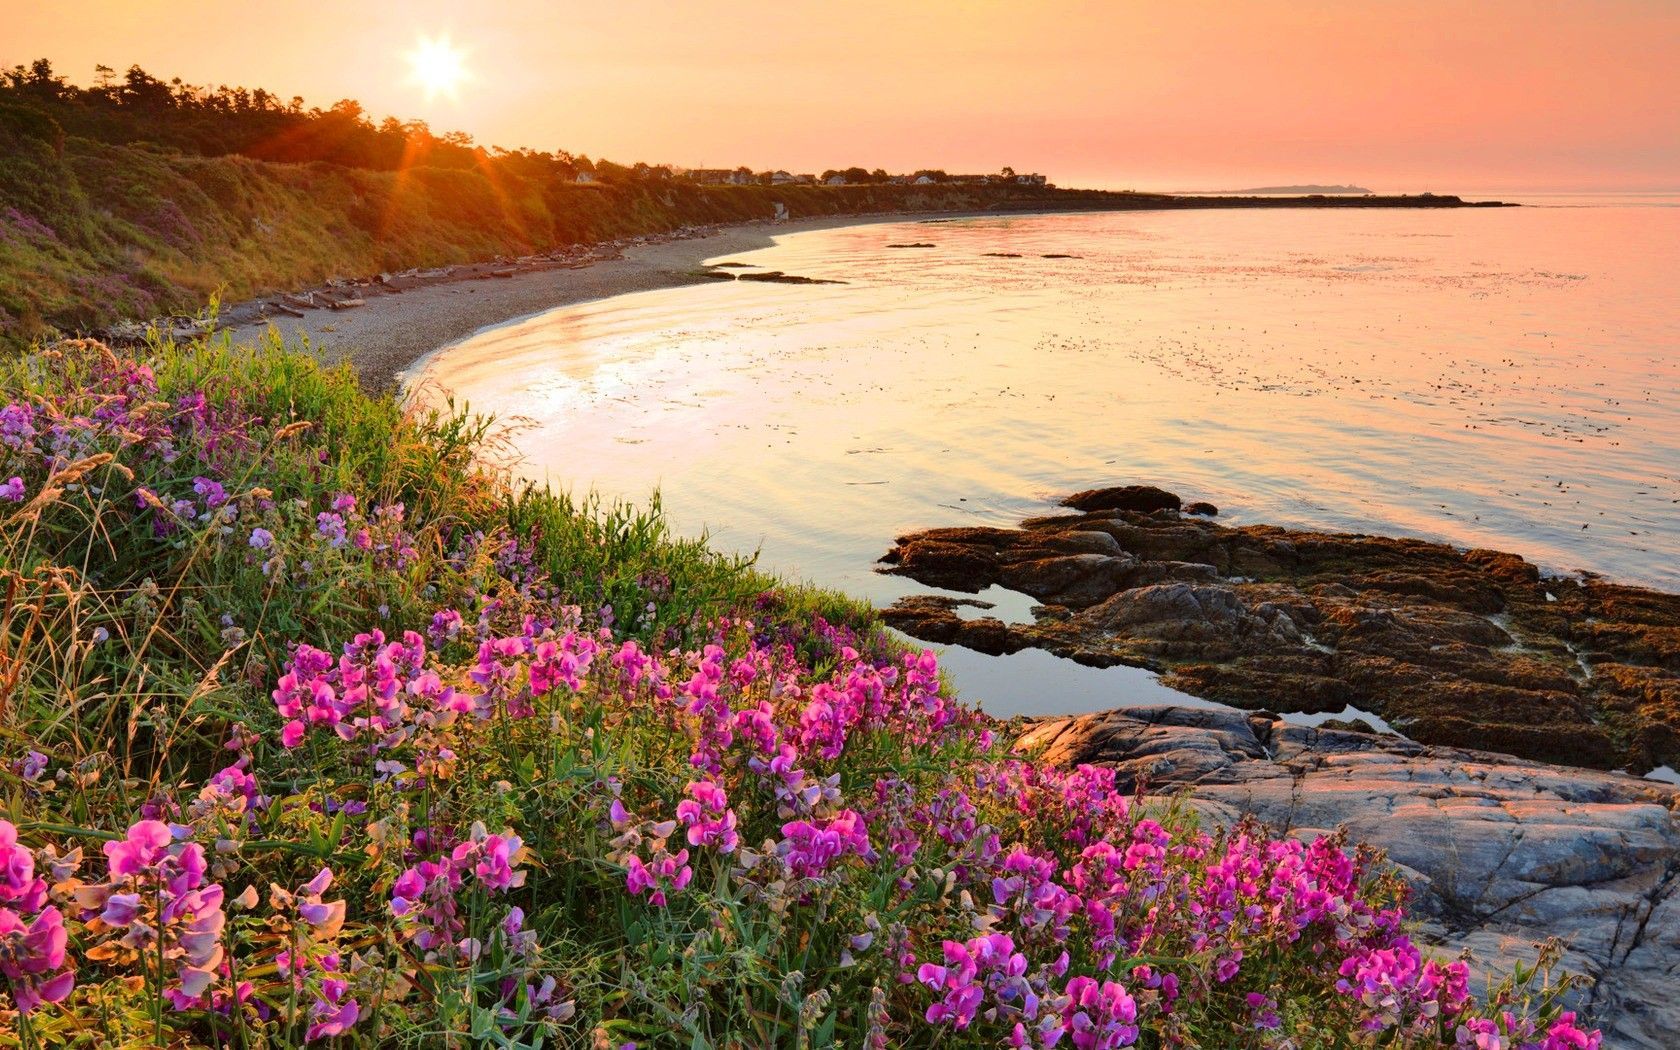 20 Outstanding beach flower desktop wallpaper You Can Get It free ...